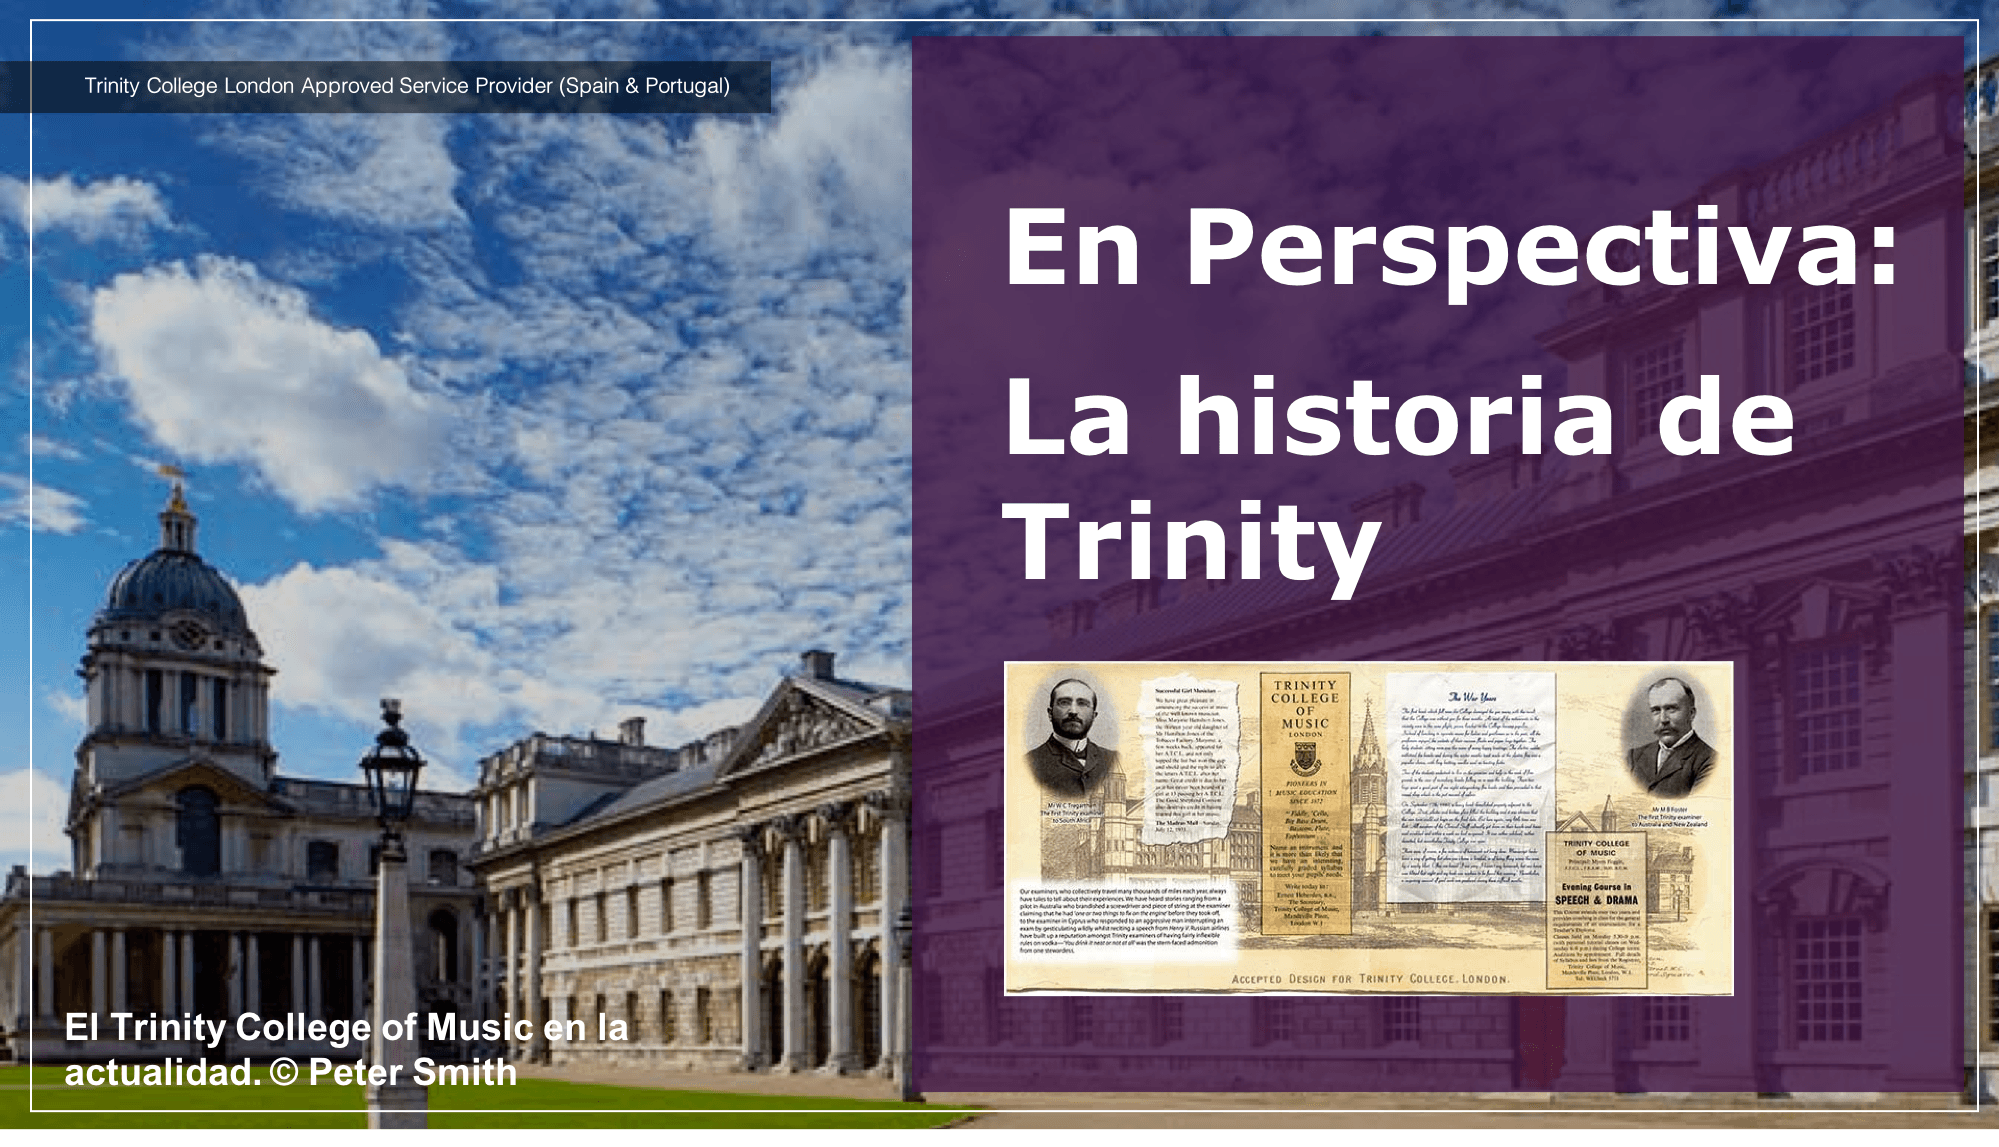 La historia de Trinity College London